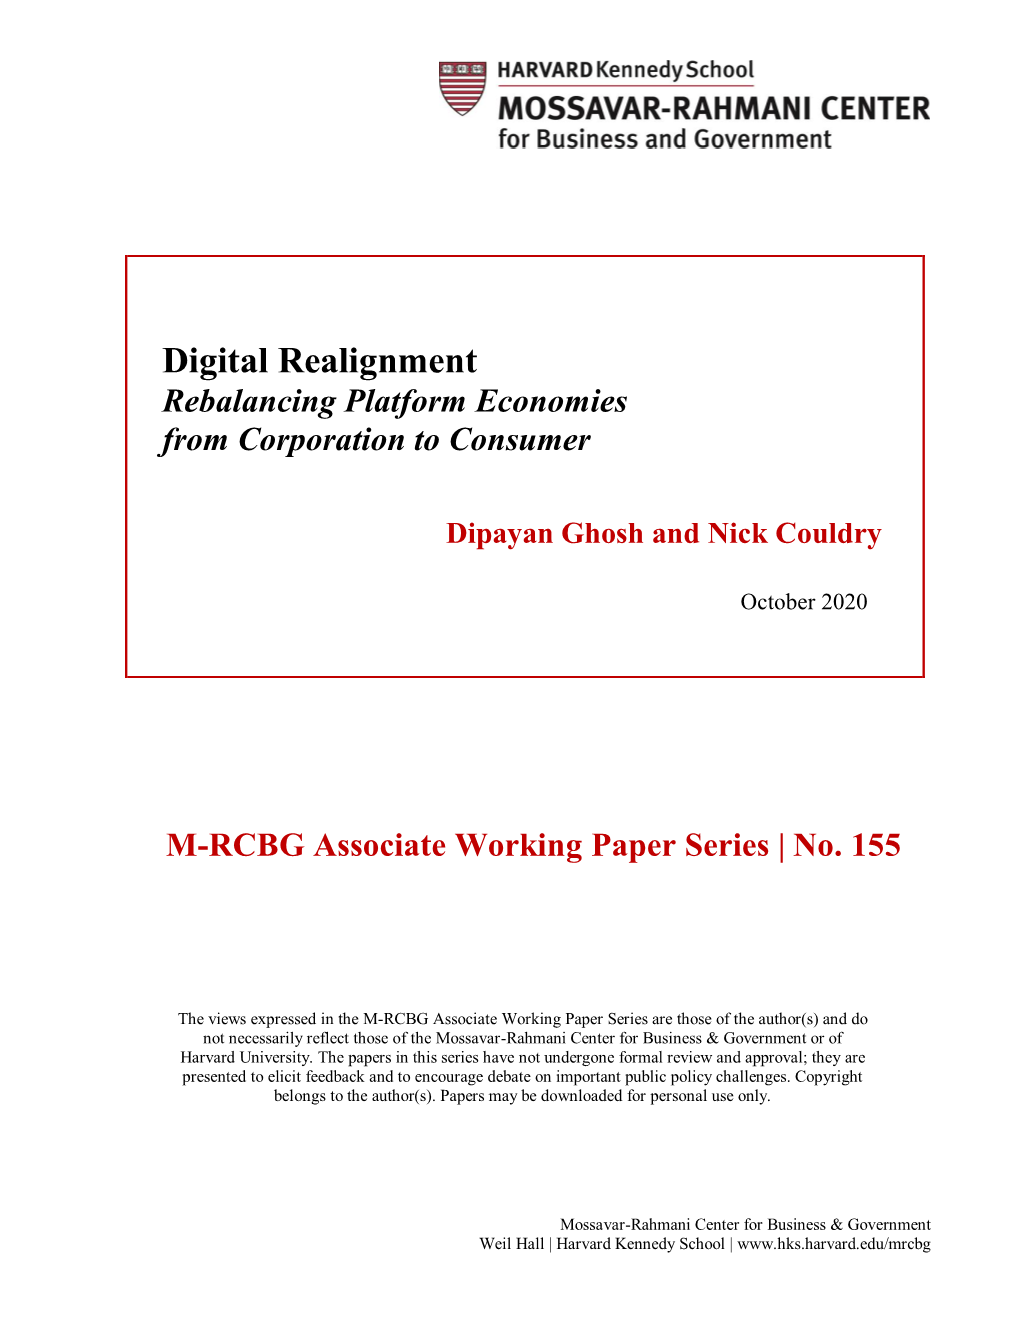 Digital Realignment Rebalancing Platform Economies from Corporation to Consumer